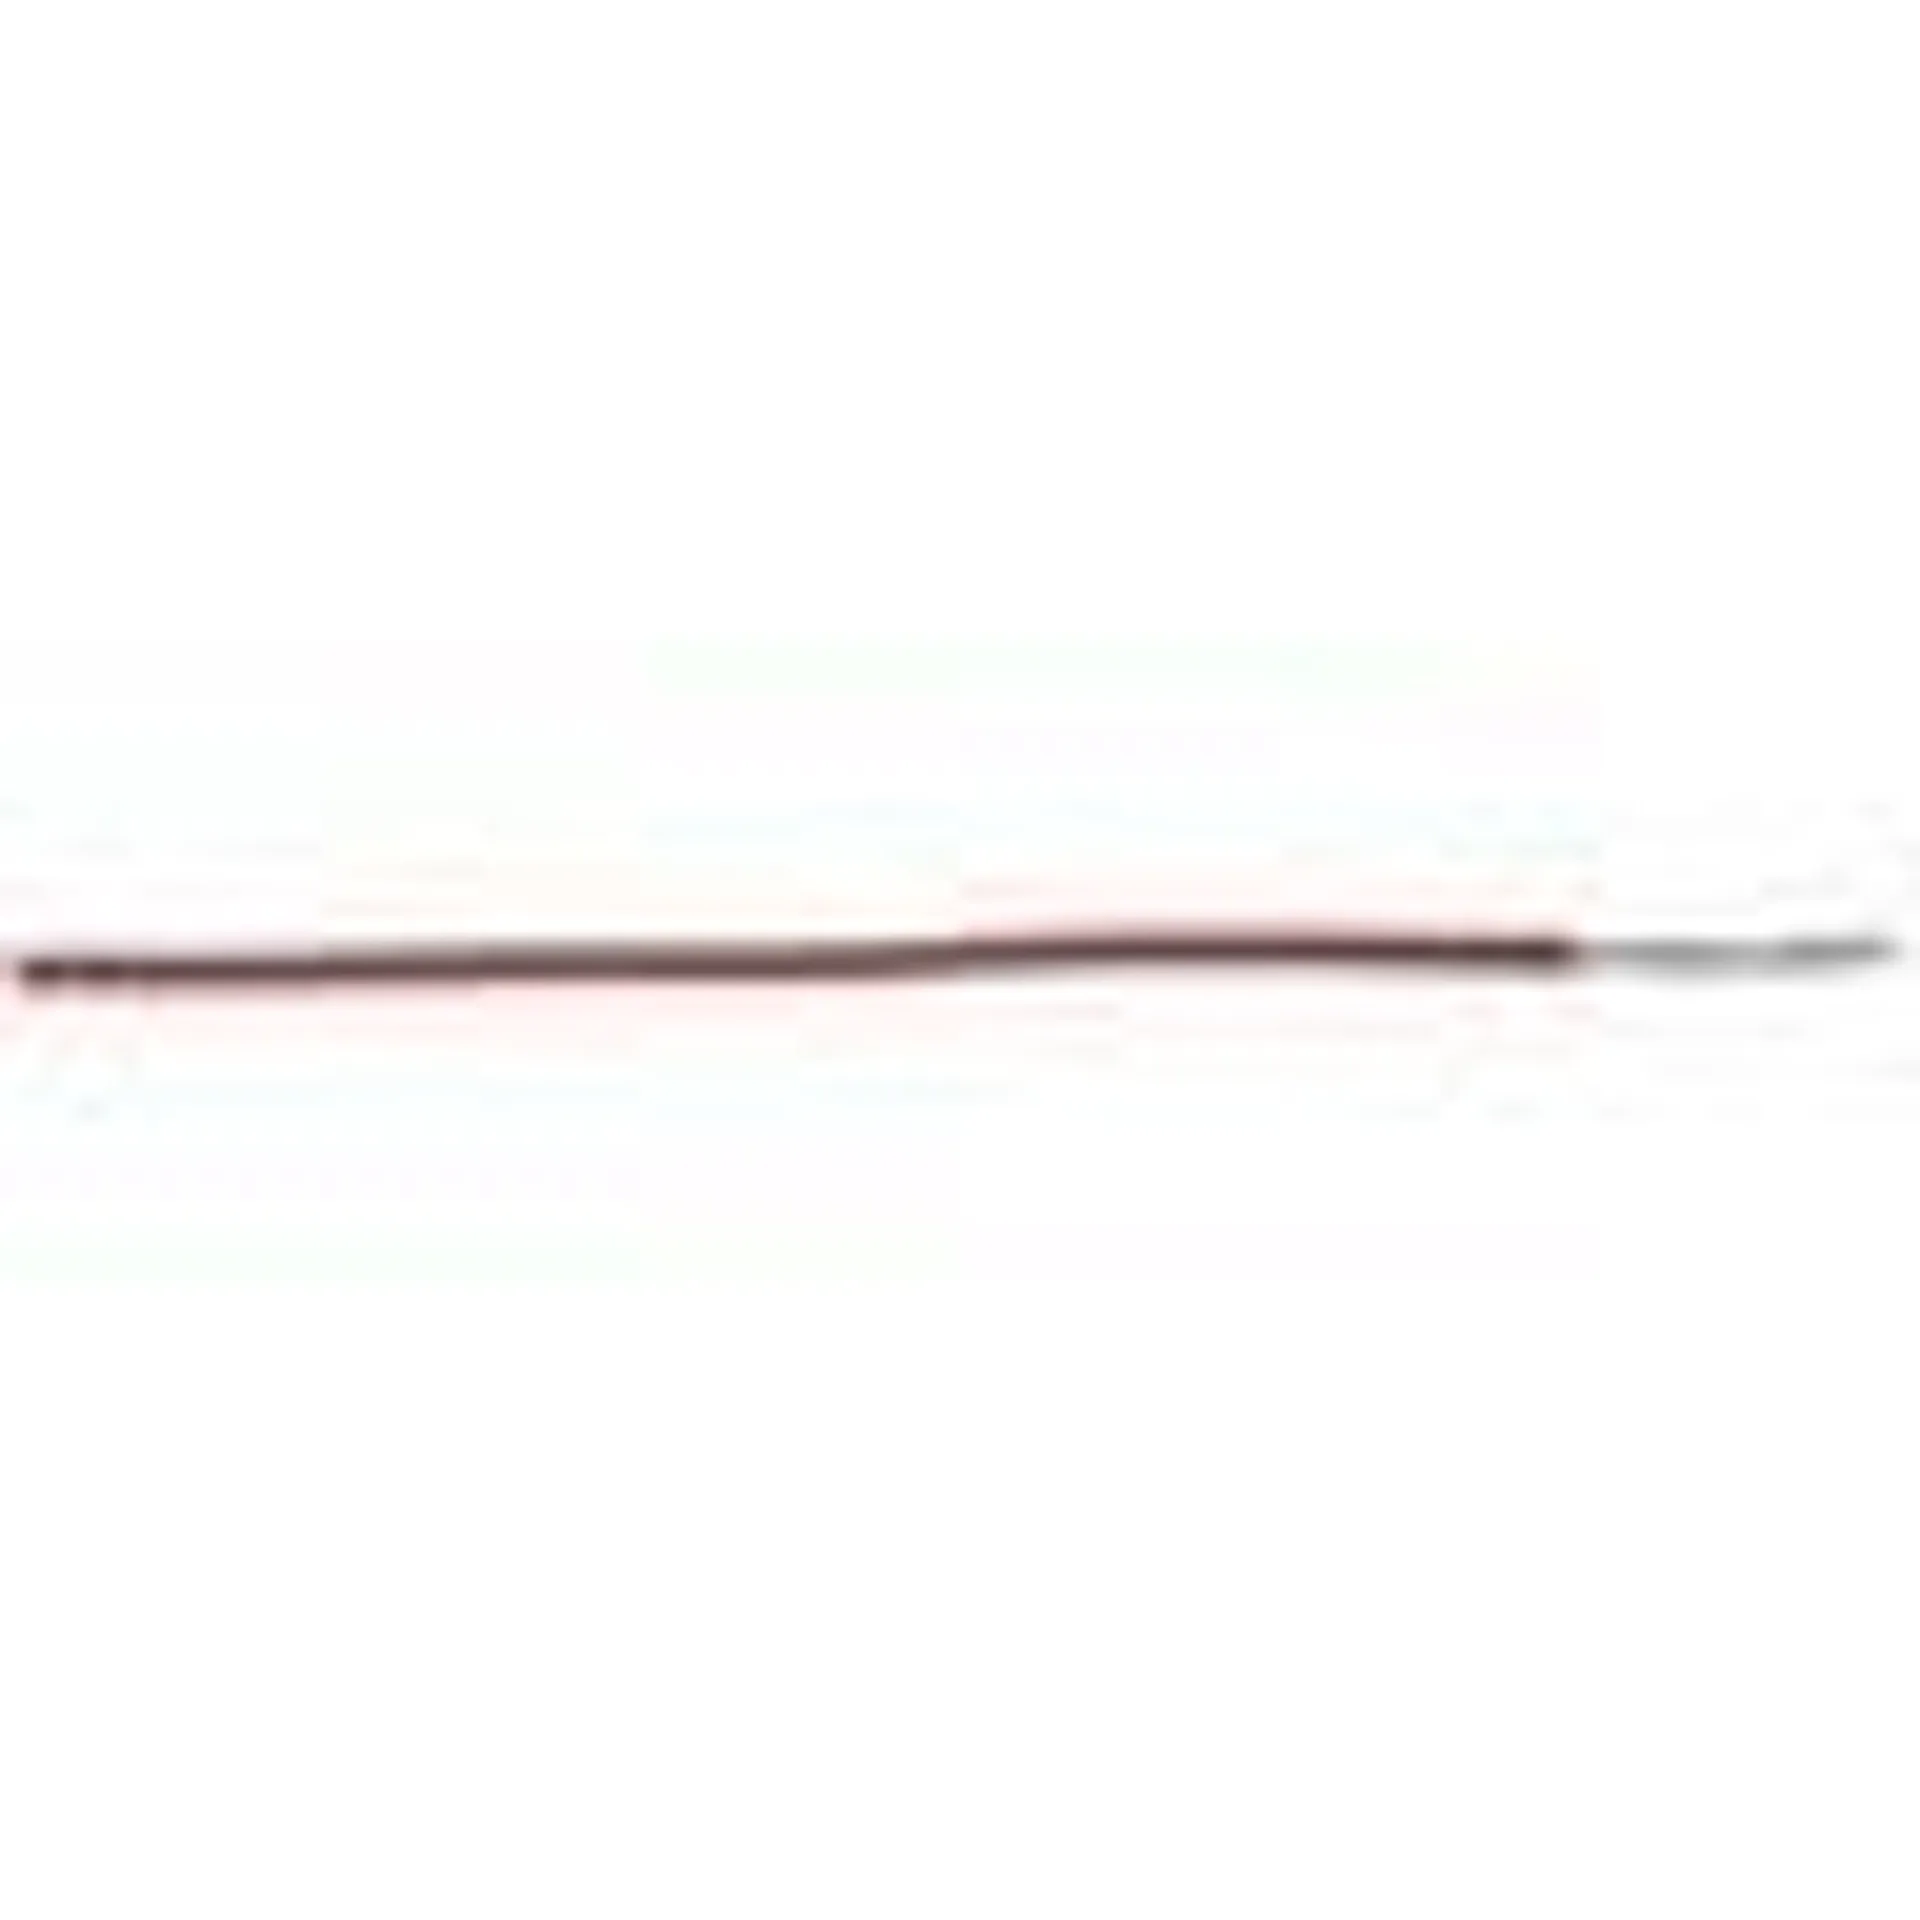 Red Flexible Light Duty Hook-up Wire - Sold per metre